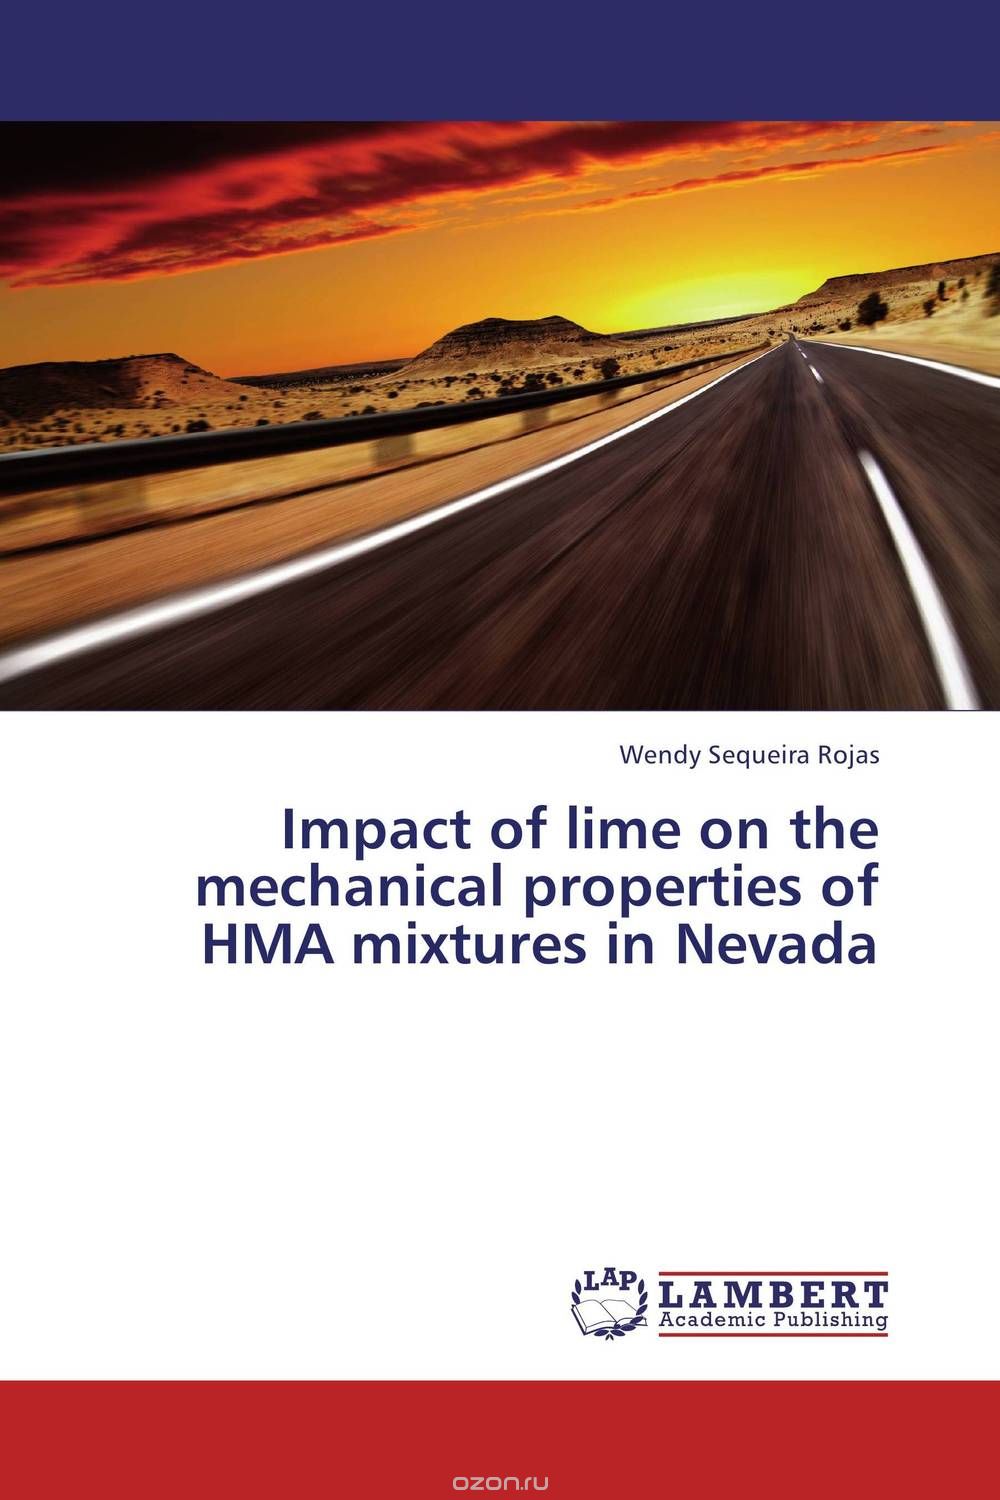 Скачать книгу "Impact of lime on the mechanical properties of HMA mixtures in Nevada"